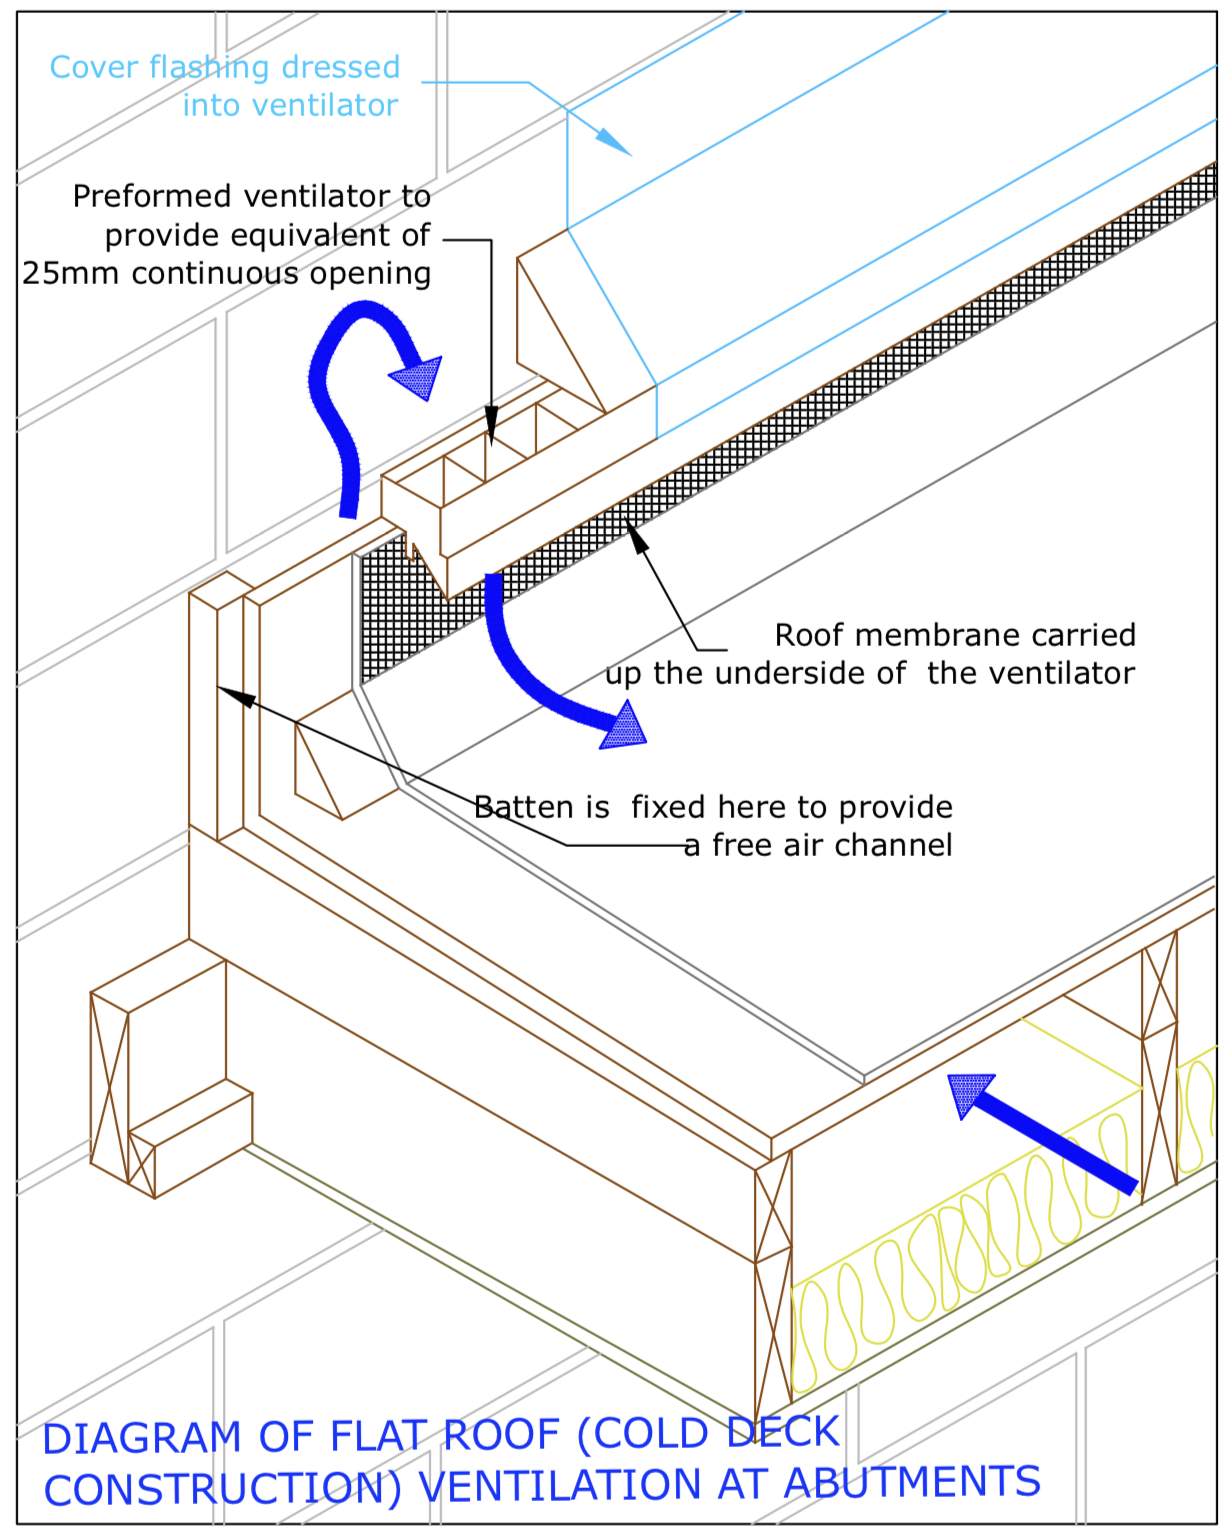 Diagram D69 - Cold deck ventilation